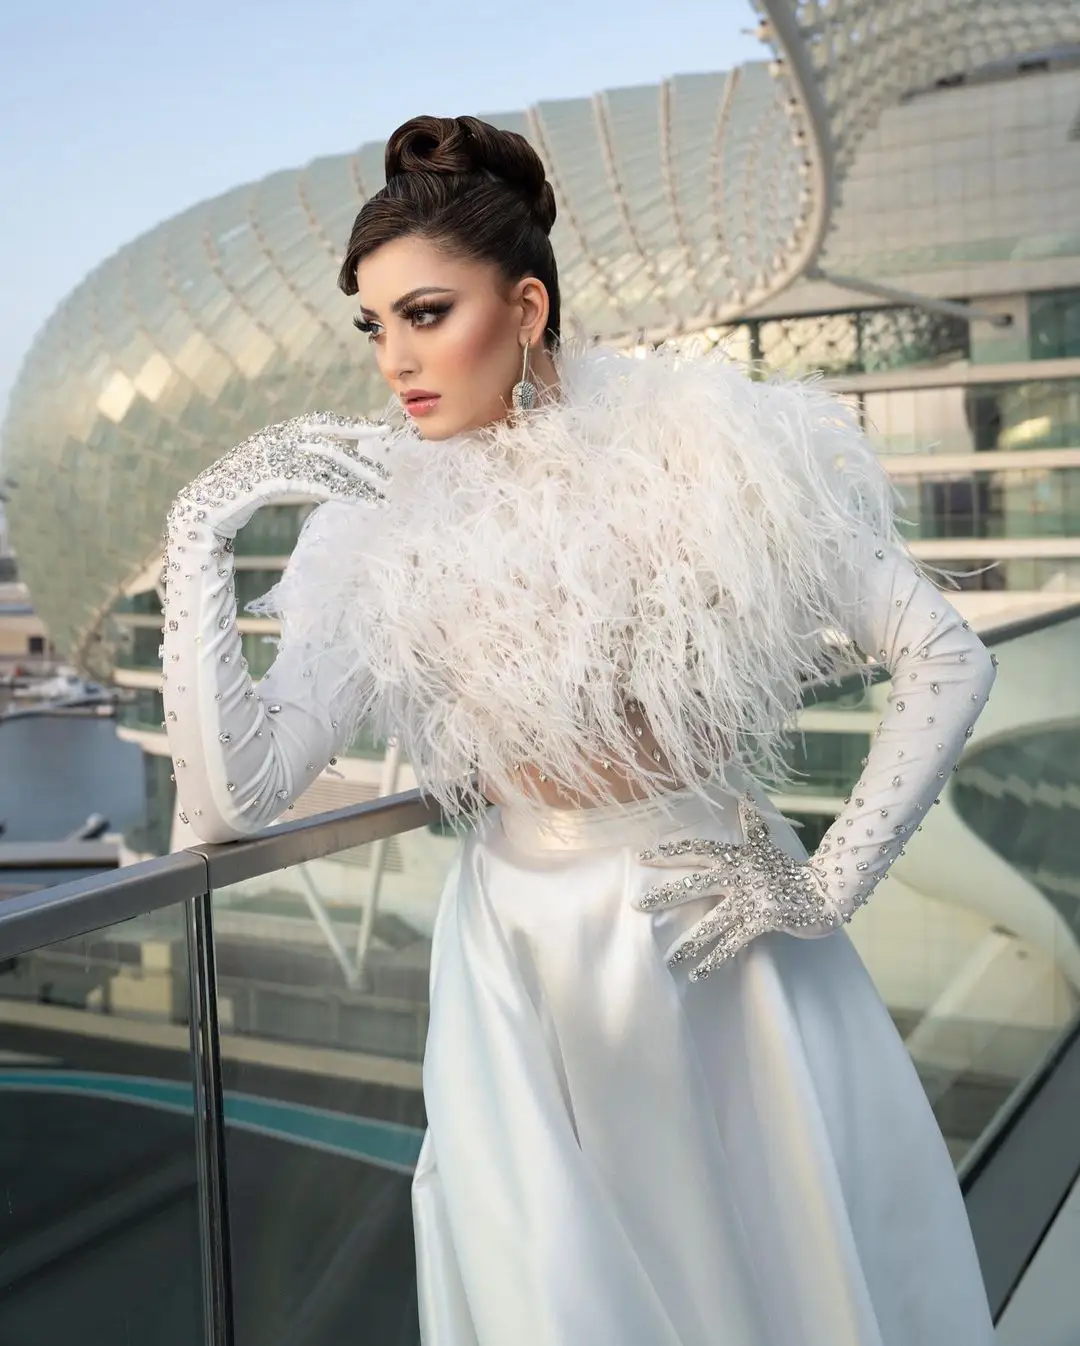 Urvashi Rautela Stunning Looks in White Dress at IIFA Awards Event Dubai 